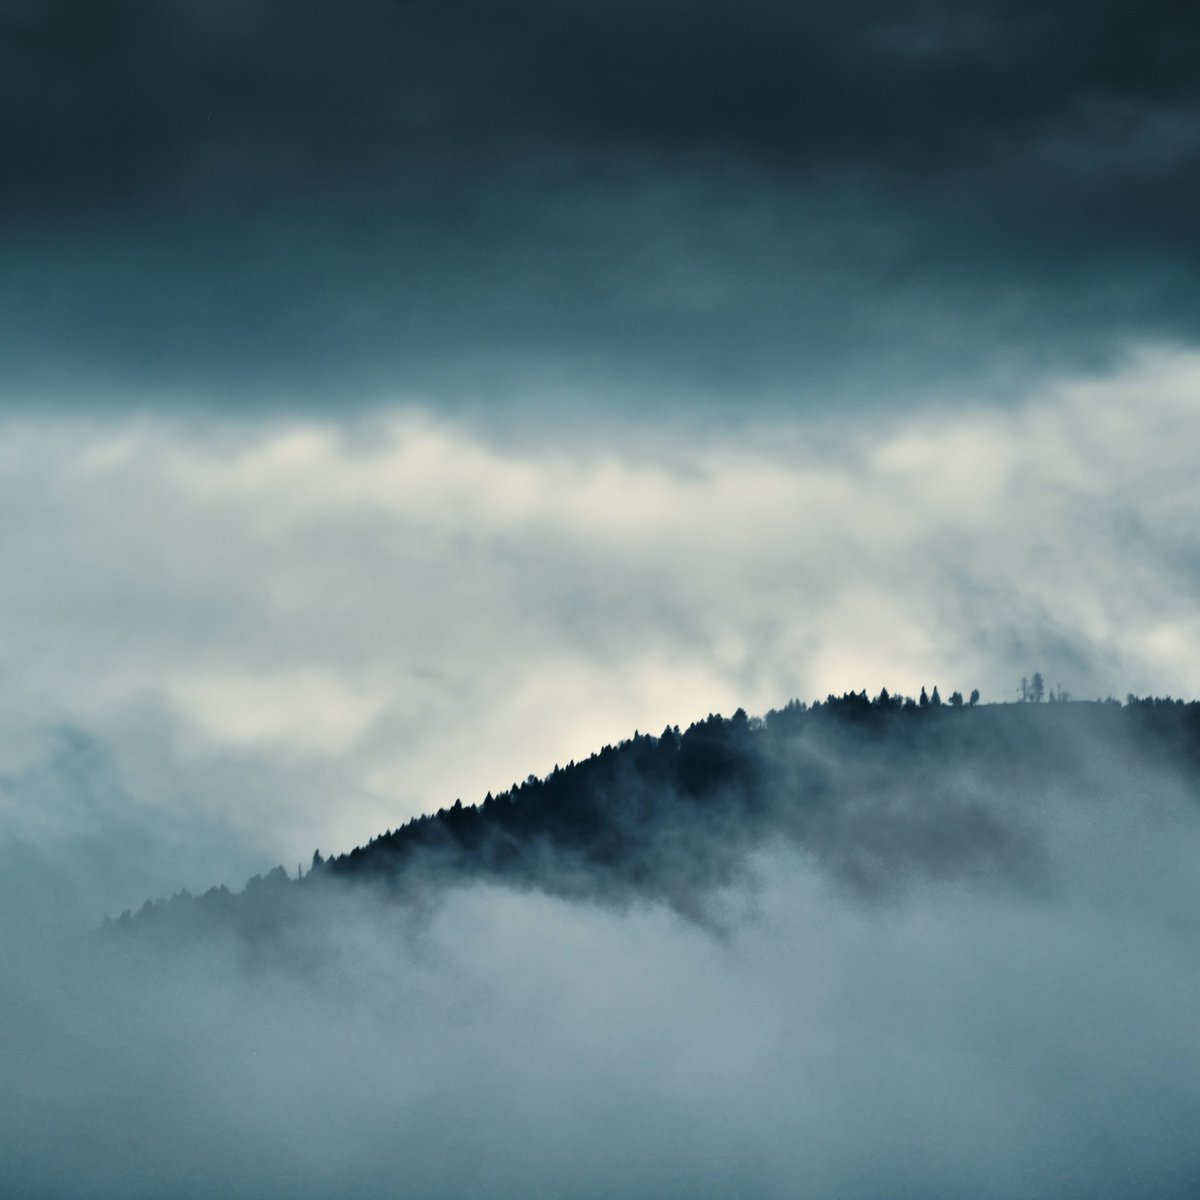 Etau

.

.

.

.

.

#boisdejussy #saleve #geneva #switzerland #suisseromande #switzerland #raw_europe #photographegeneve #landscapephotography #naturephotography #travelphotography #fujifilm  #wanderlust  #mountain #mist #clouds #cloudappreciationsociety #dramaticsky